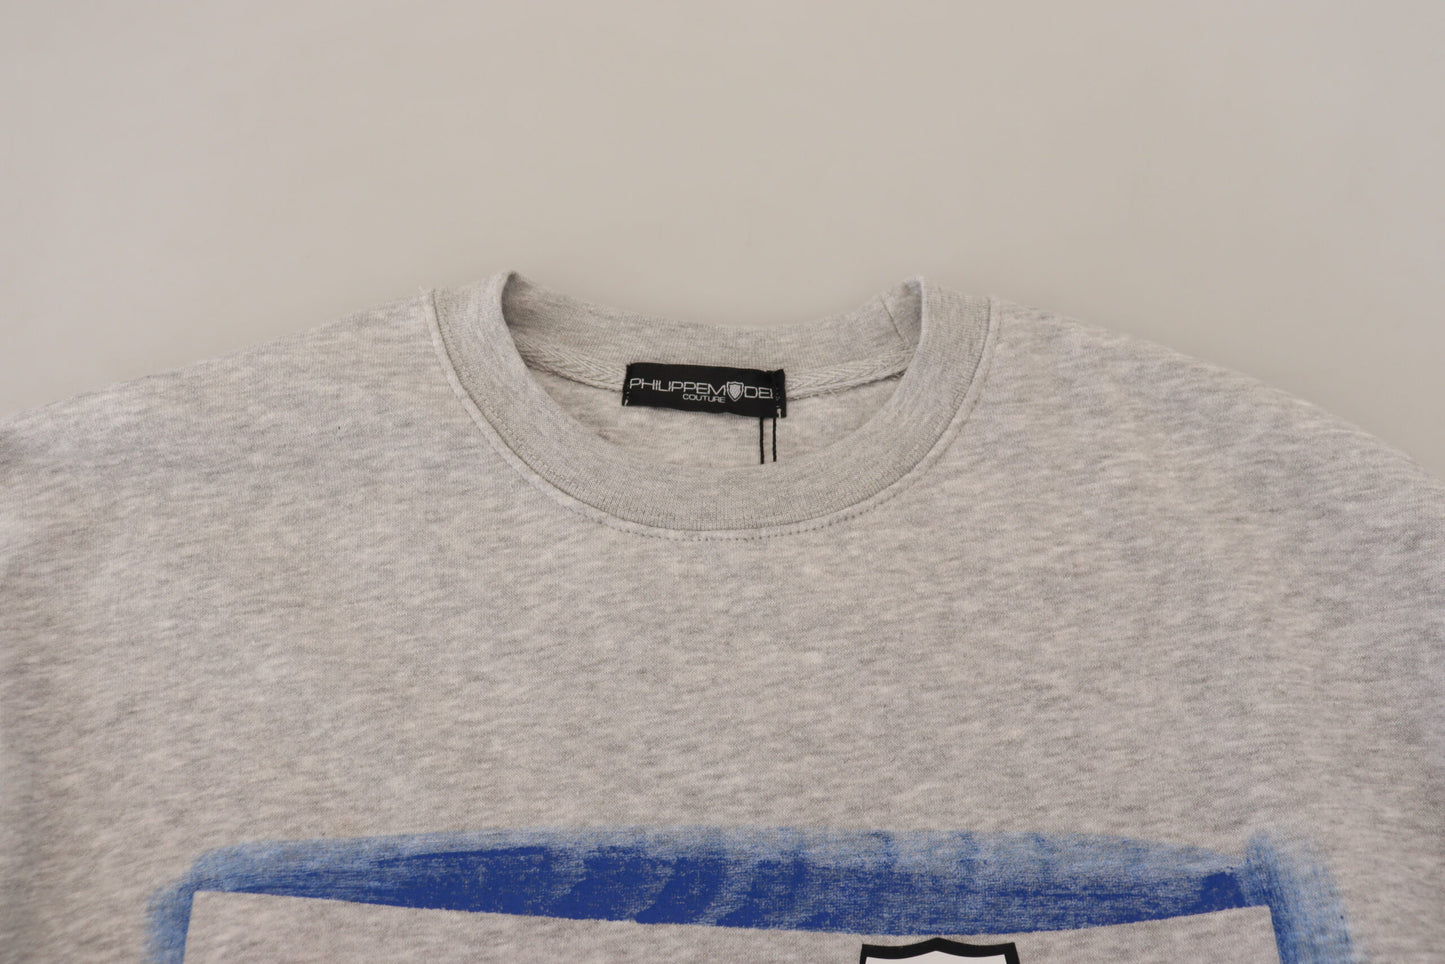 Elegant Gray Printed Cotton Sweater